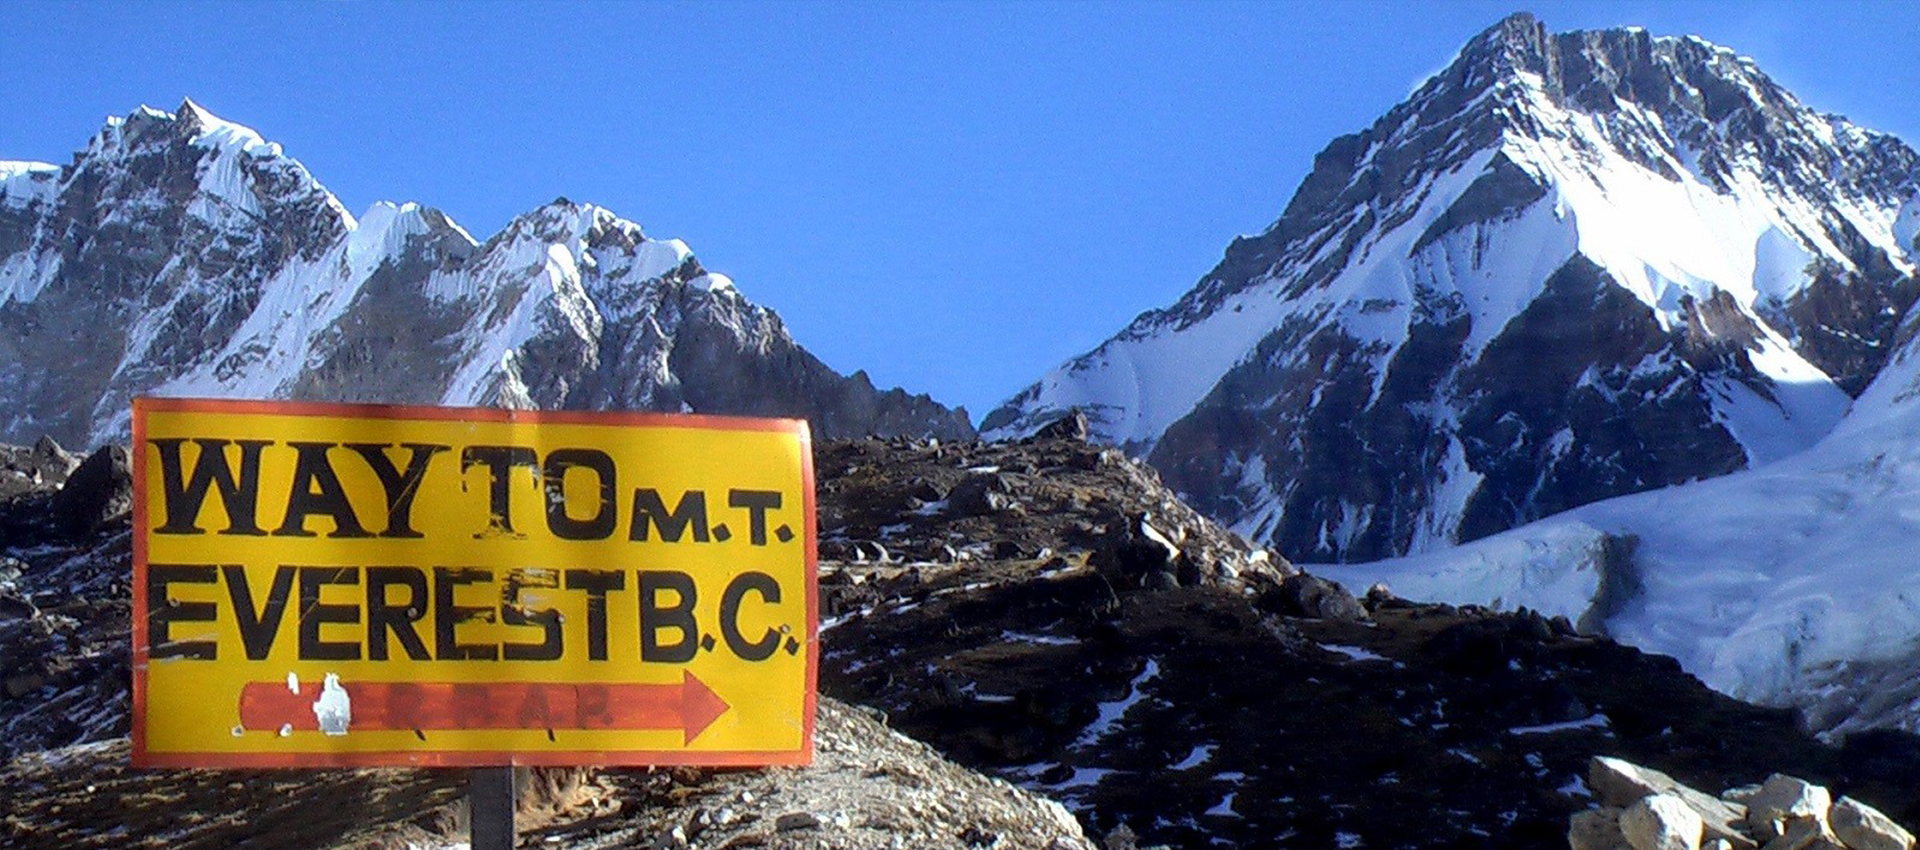 Everest Base Camp Comfort Trek